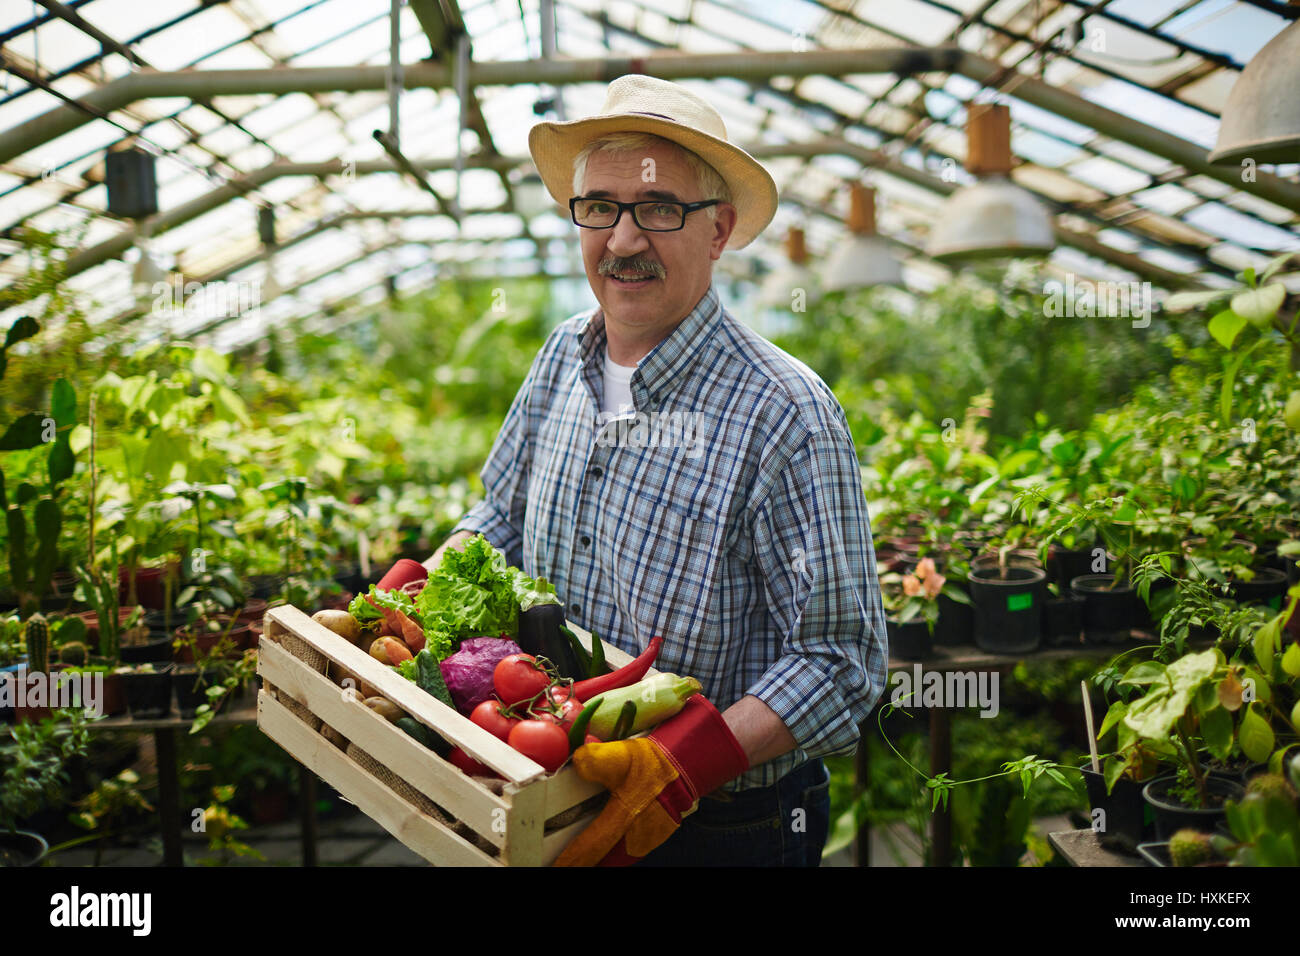 Smiling Senior Man Working in Vegetable Garden Stock Photo